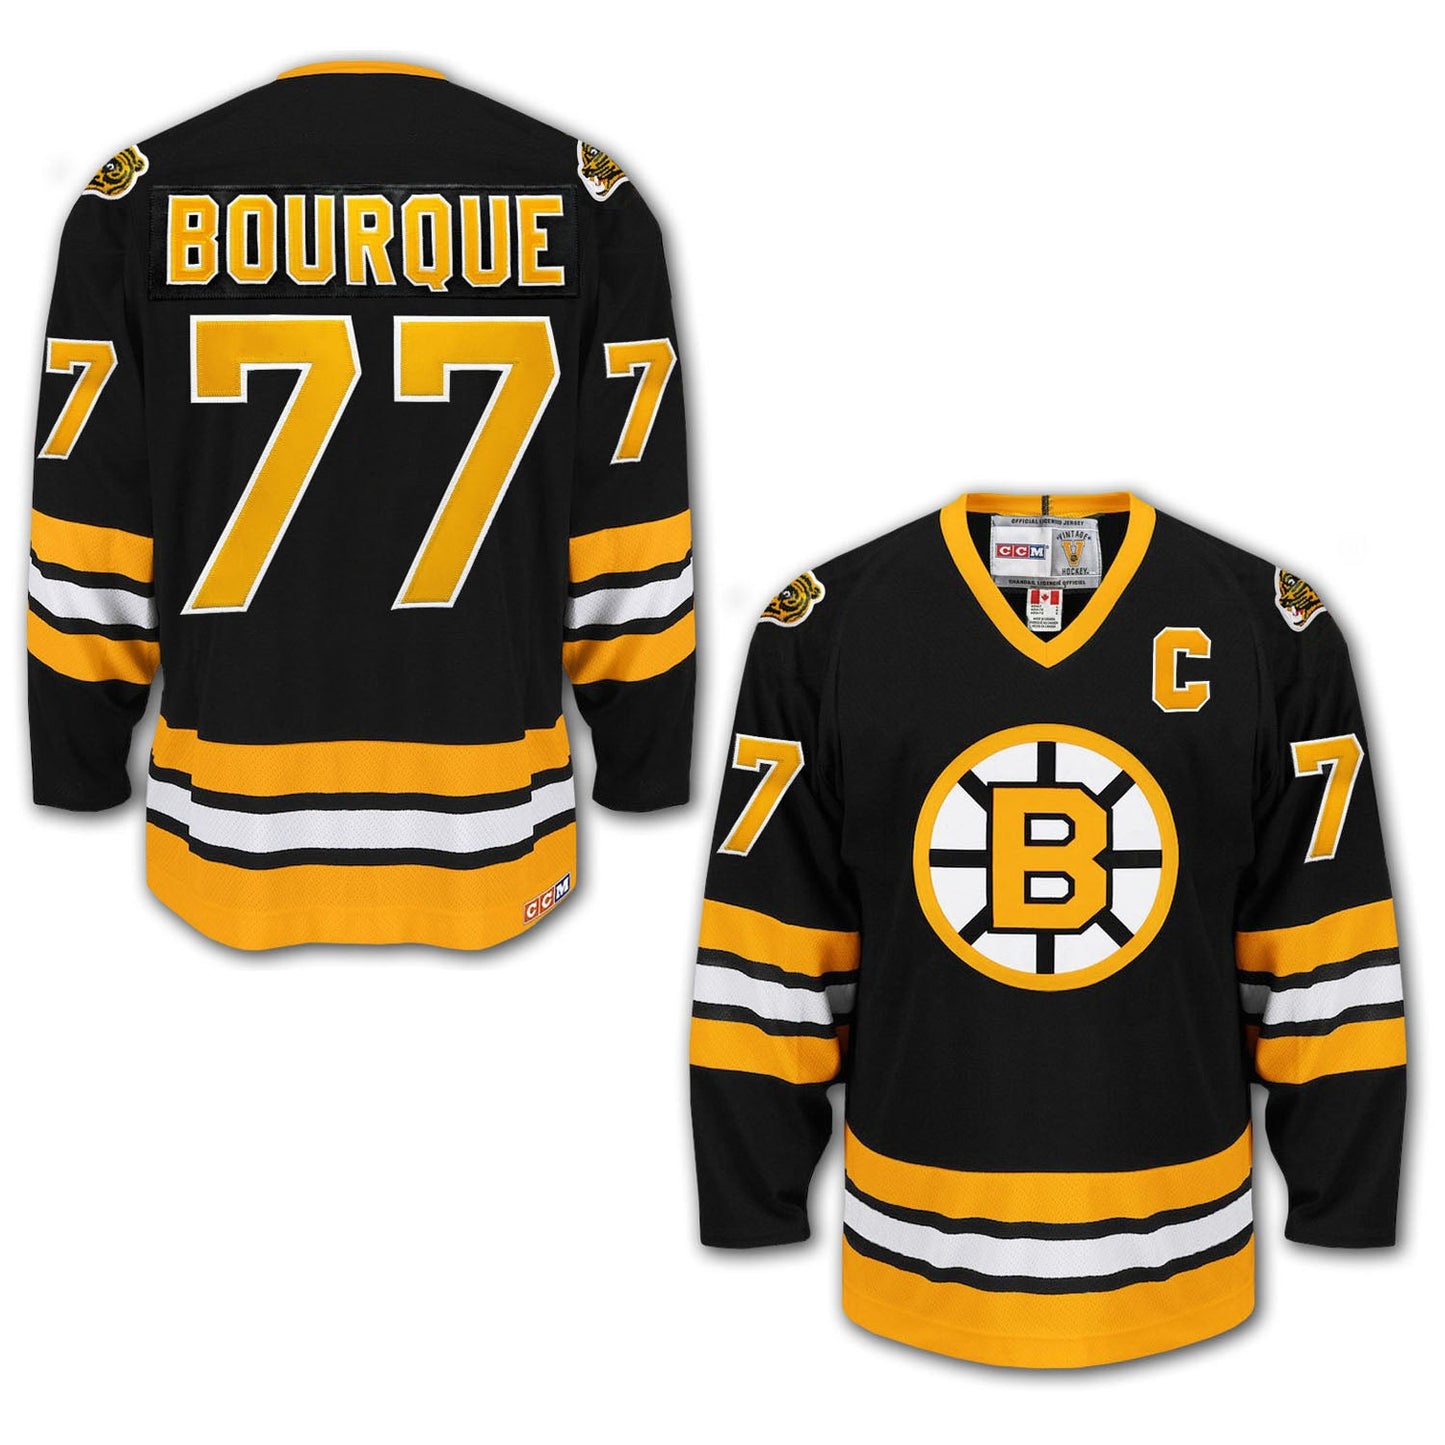 NHL Ray Bourque Boston Bruins 77 Jersey